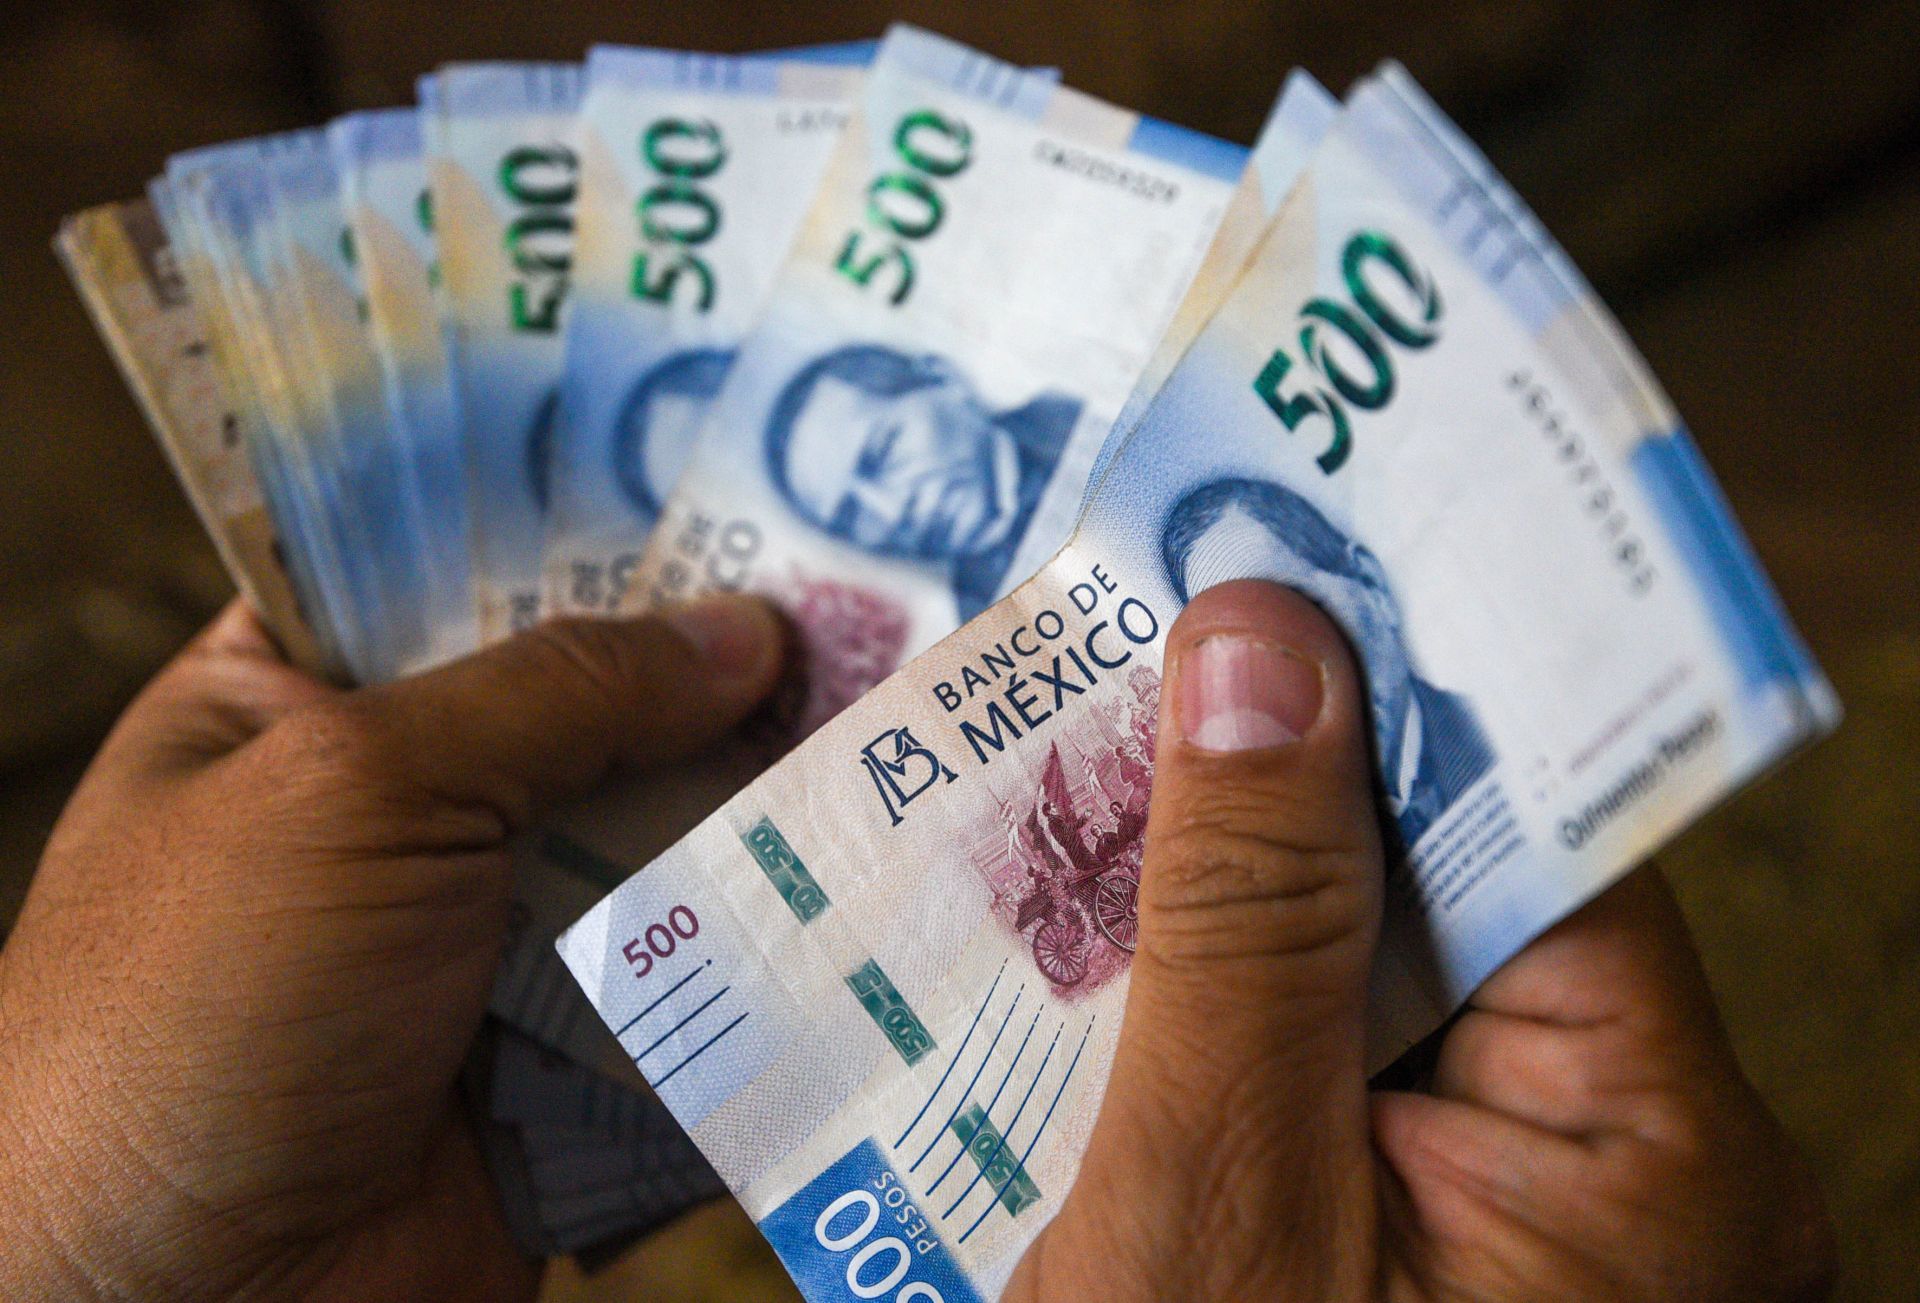 Así opera ‘Blues Campeche Money’, la página que vende billetes falsos en redes sociales